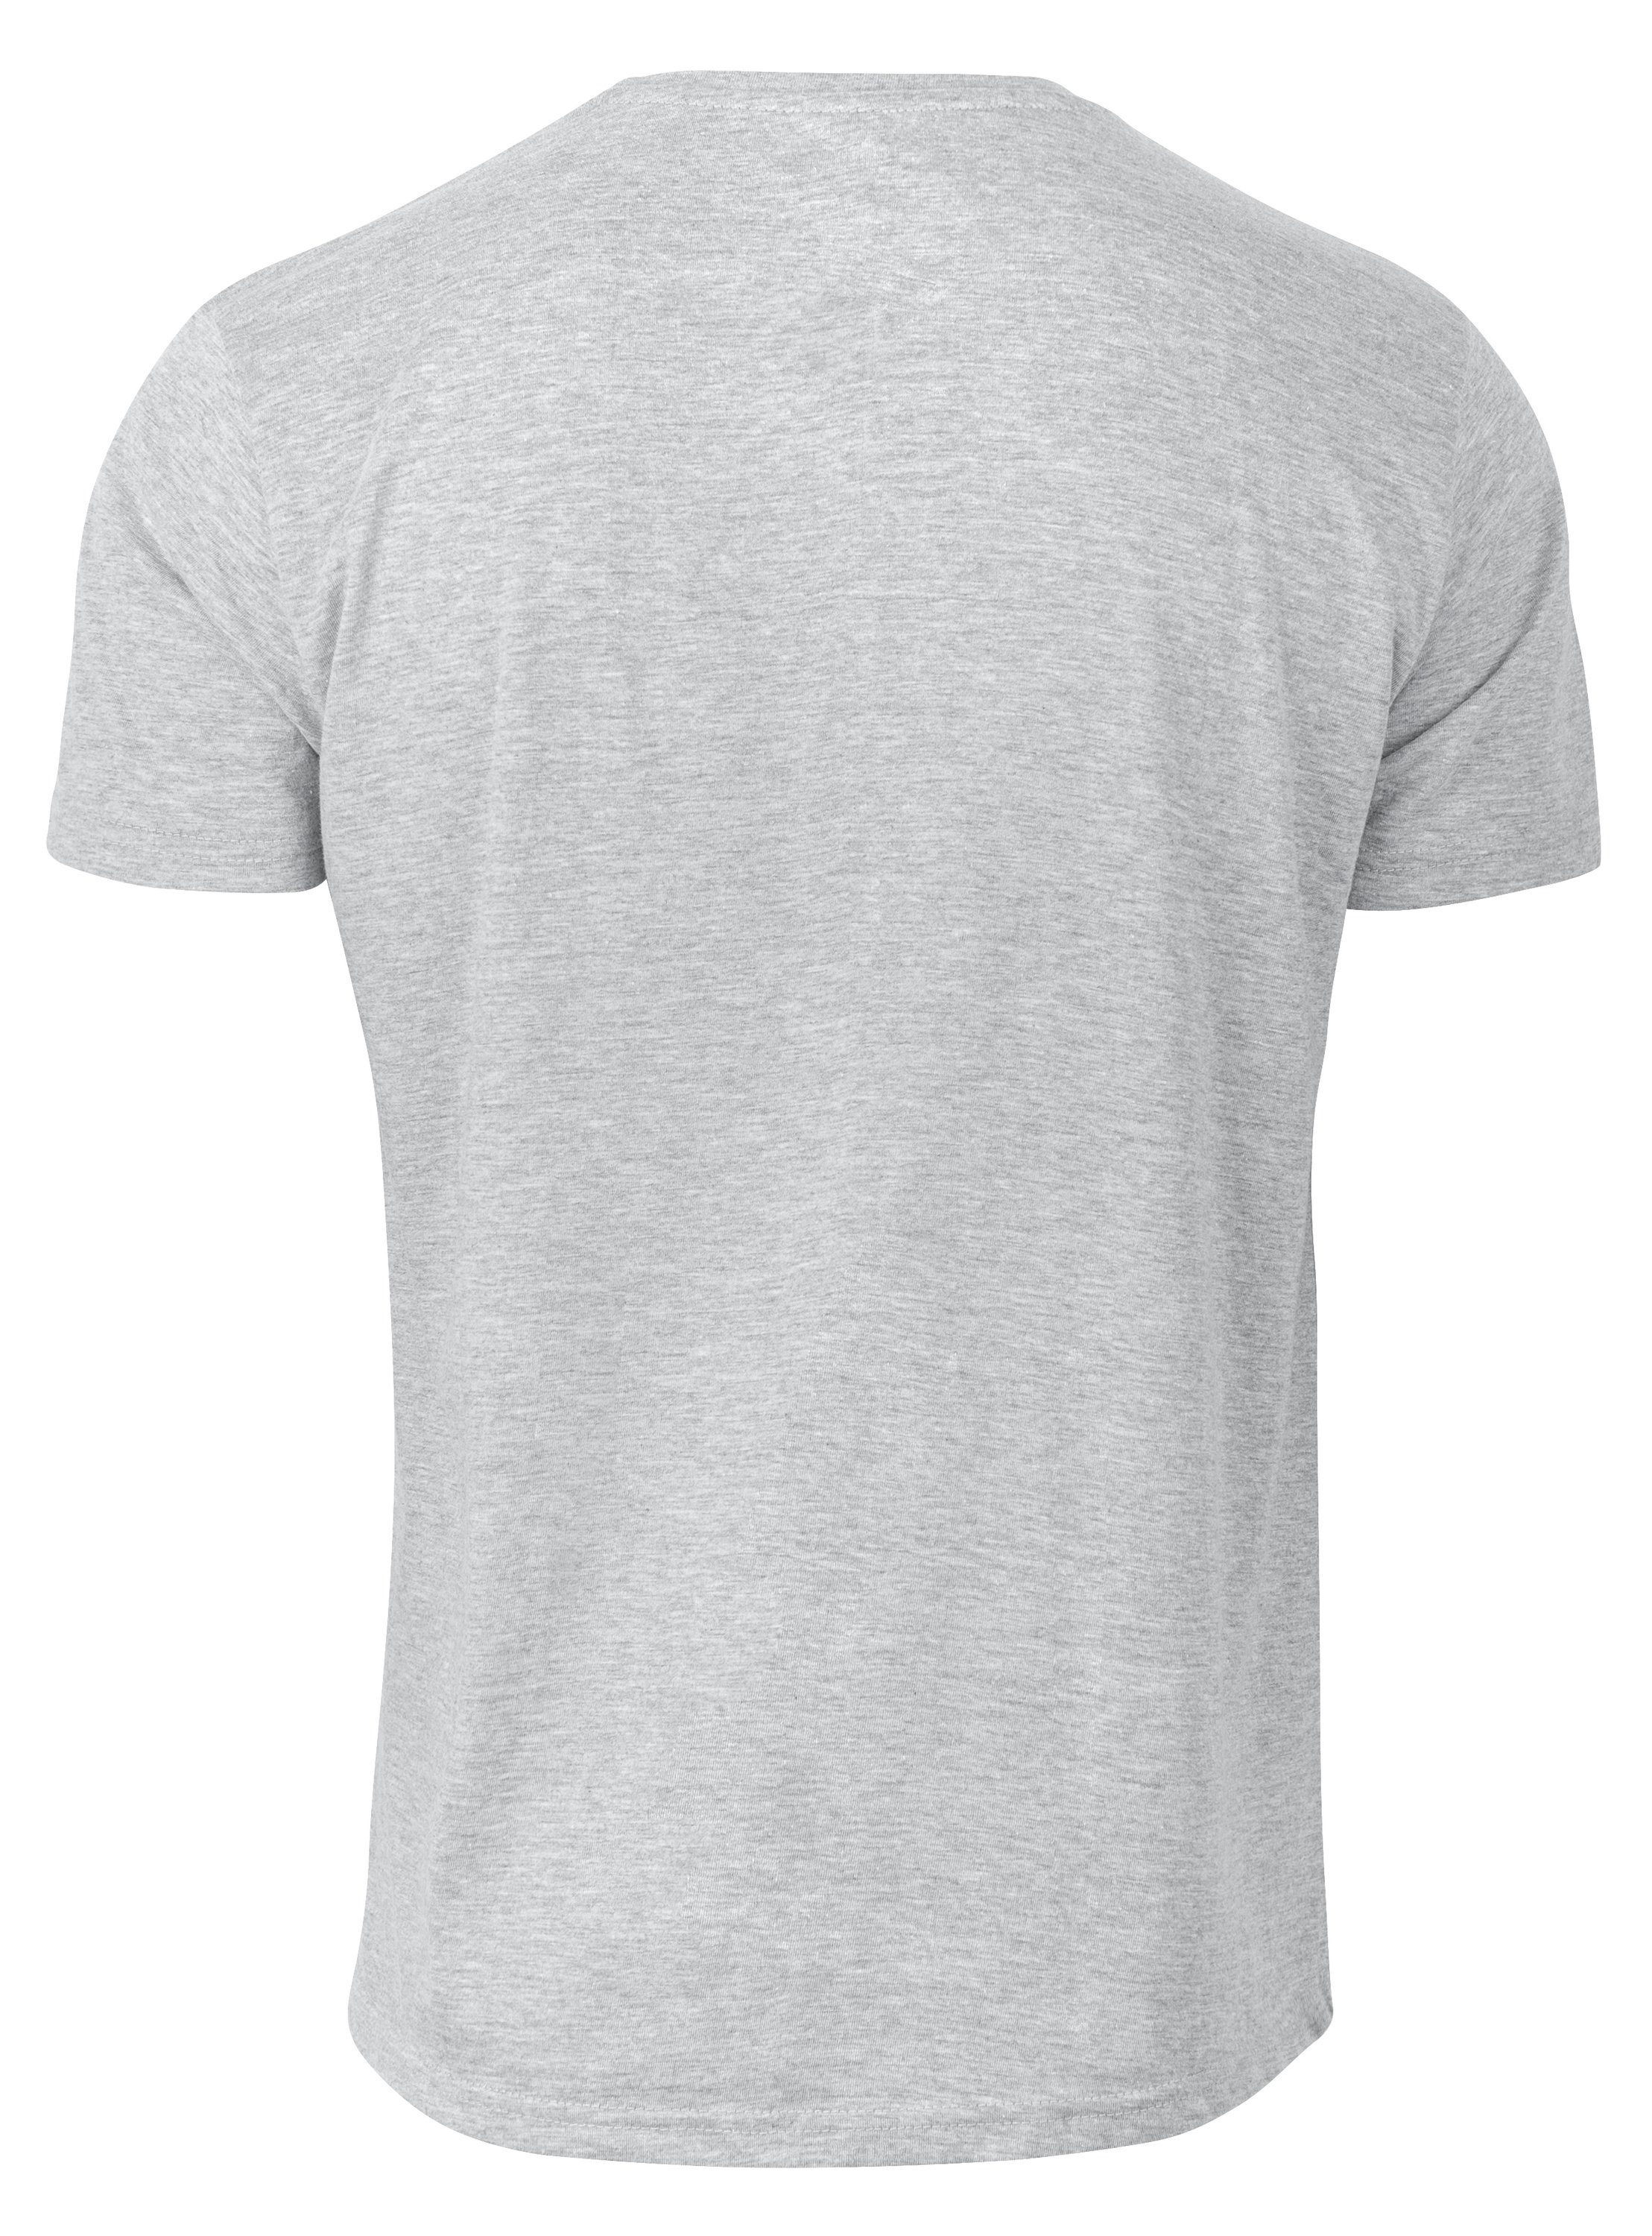 Summer T-Shirt Prime® Cotton Skull grau